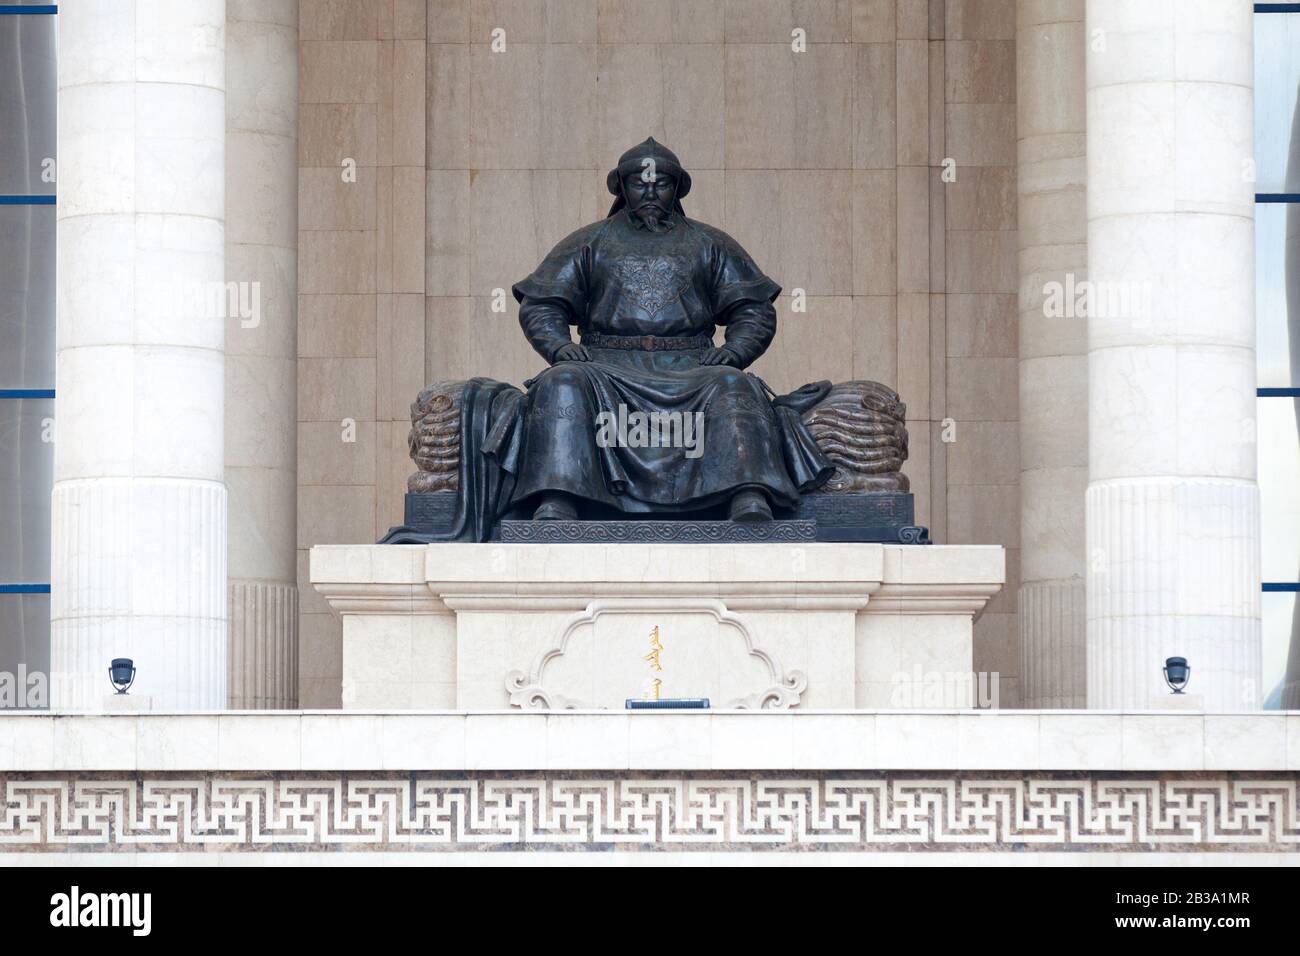 Ulan Bator, Mongolia - 31 luglio 2018: Monumento a Ögedei Khan al Palazzo del Governo (mongolo: Засгын газрын ордон, Zasgiin gazriin ordon). Foto Stock